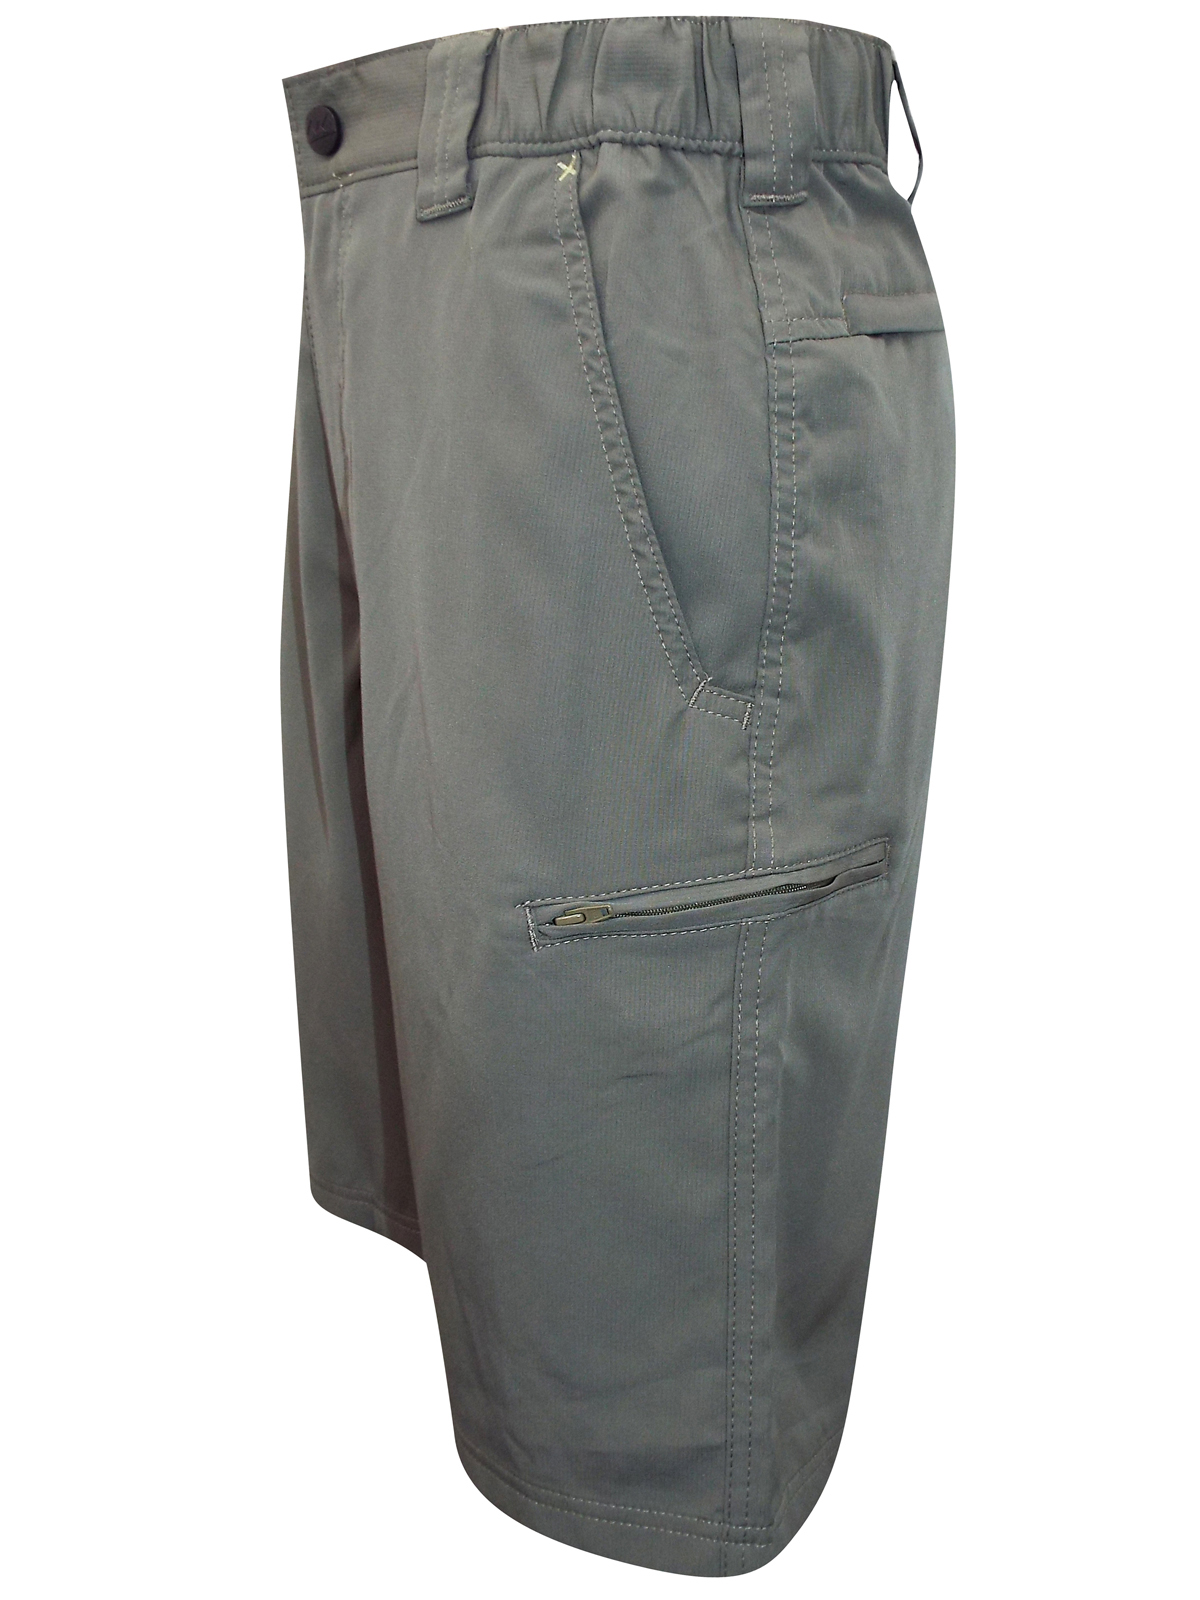 Wrangler - - Wr4ngler KHAKI Zipped Pocket Cargo Shorts - Waist Size 32 ...